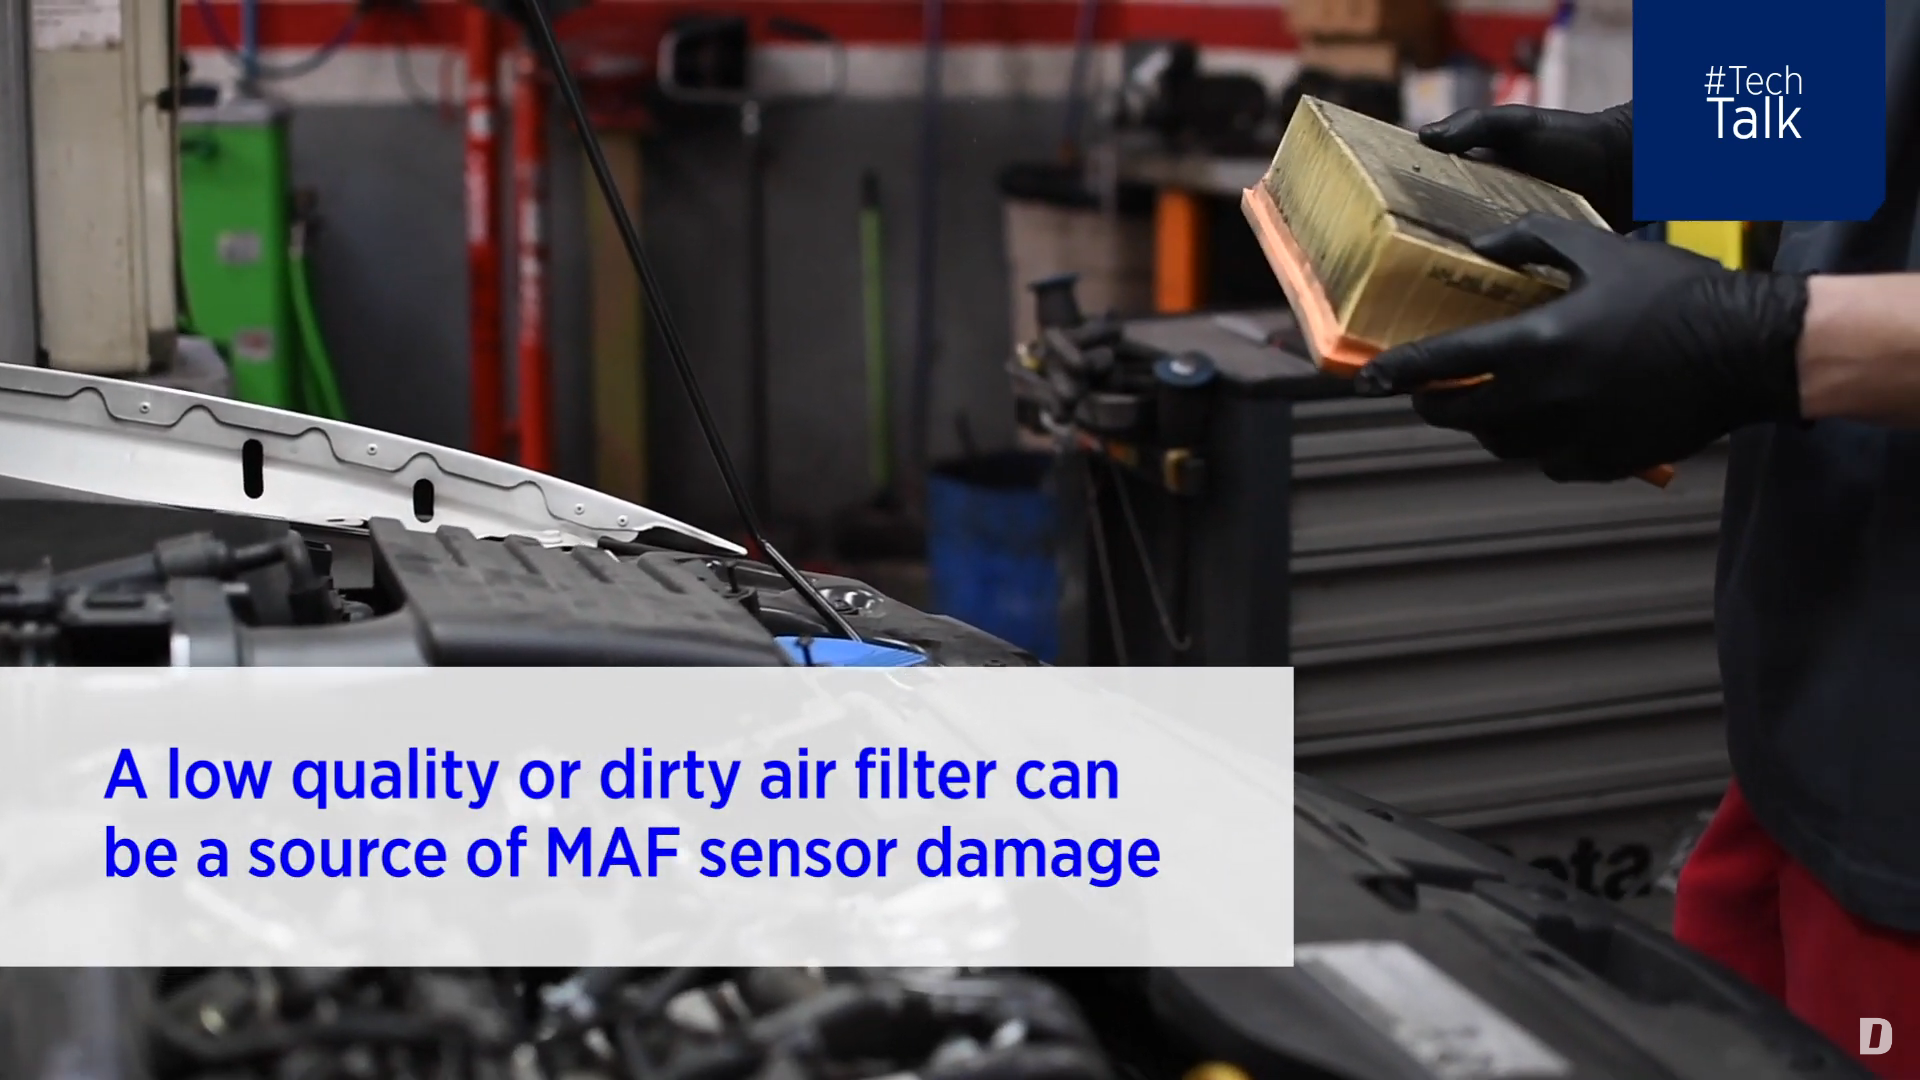 Protecting MAF sensors | #DTmasterclass